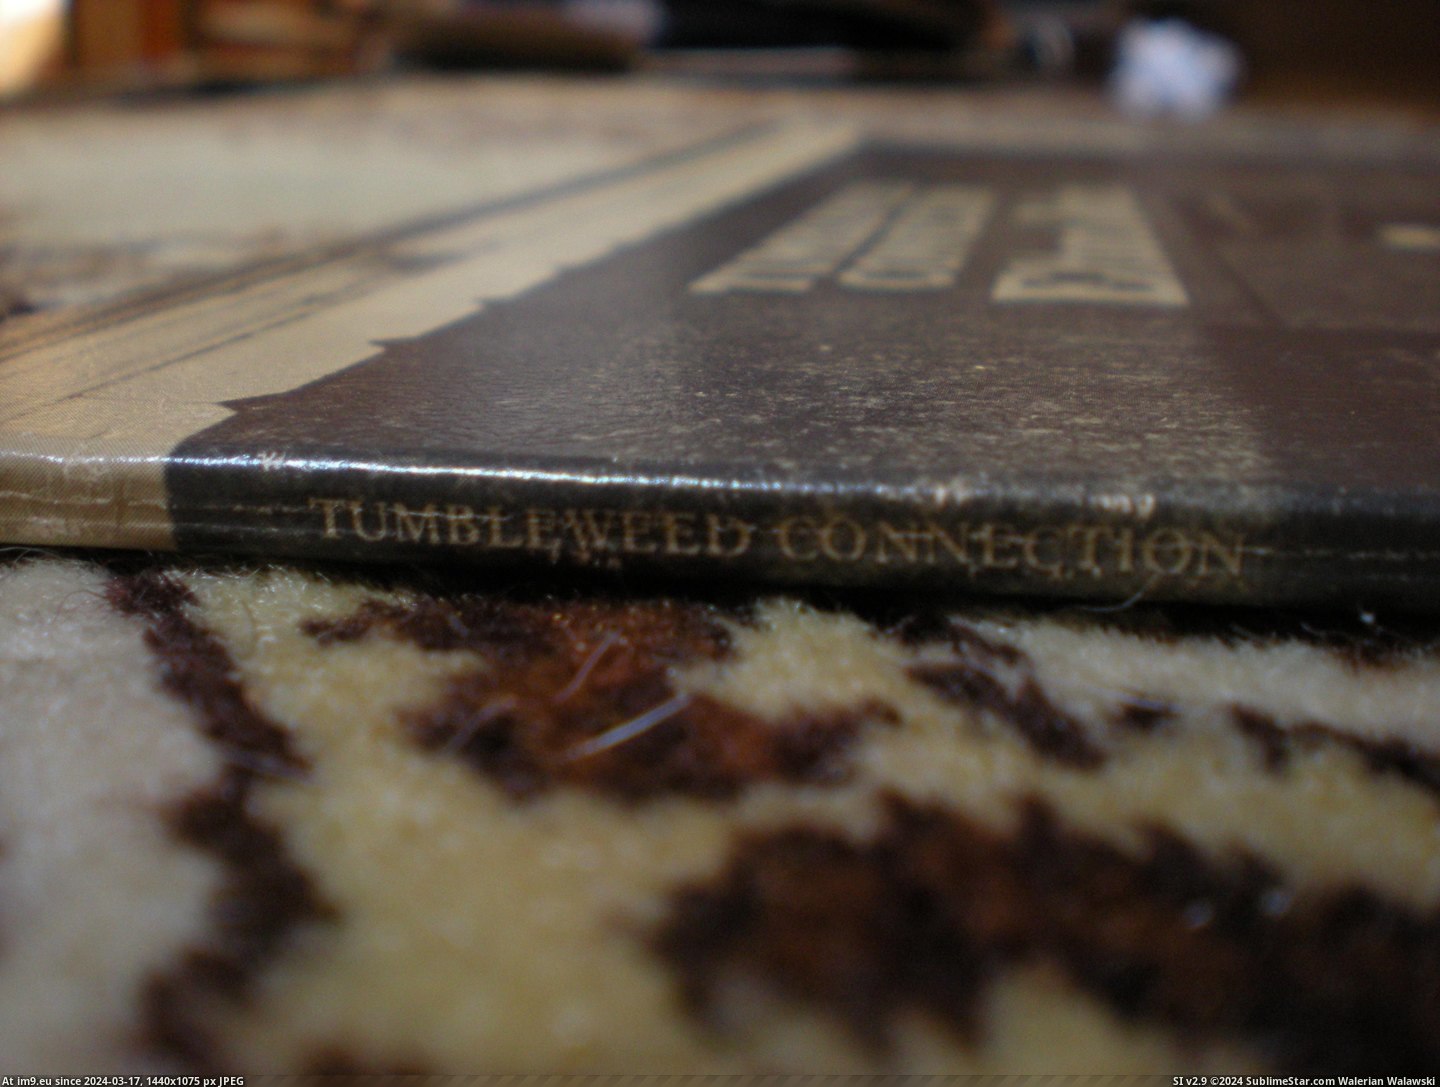  #Tumbleweed  Tumbleweed 9 Pic. (Изображение из альбом new 1))